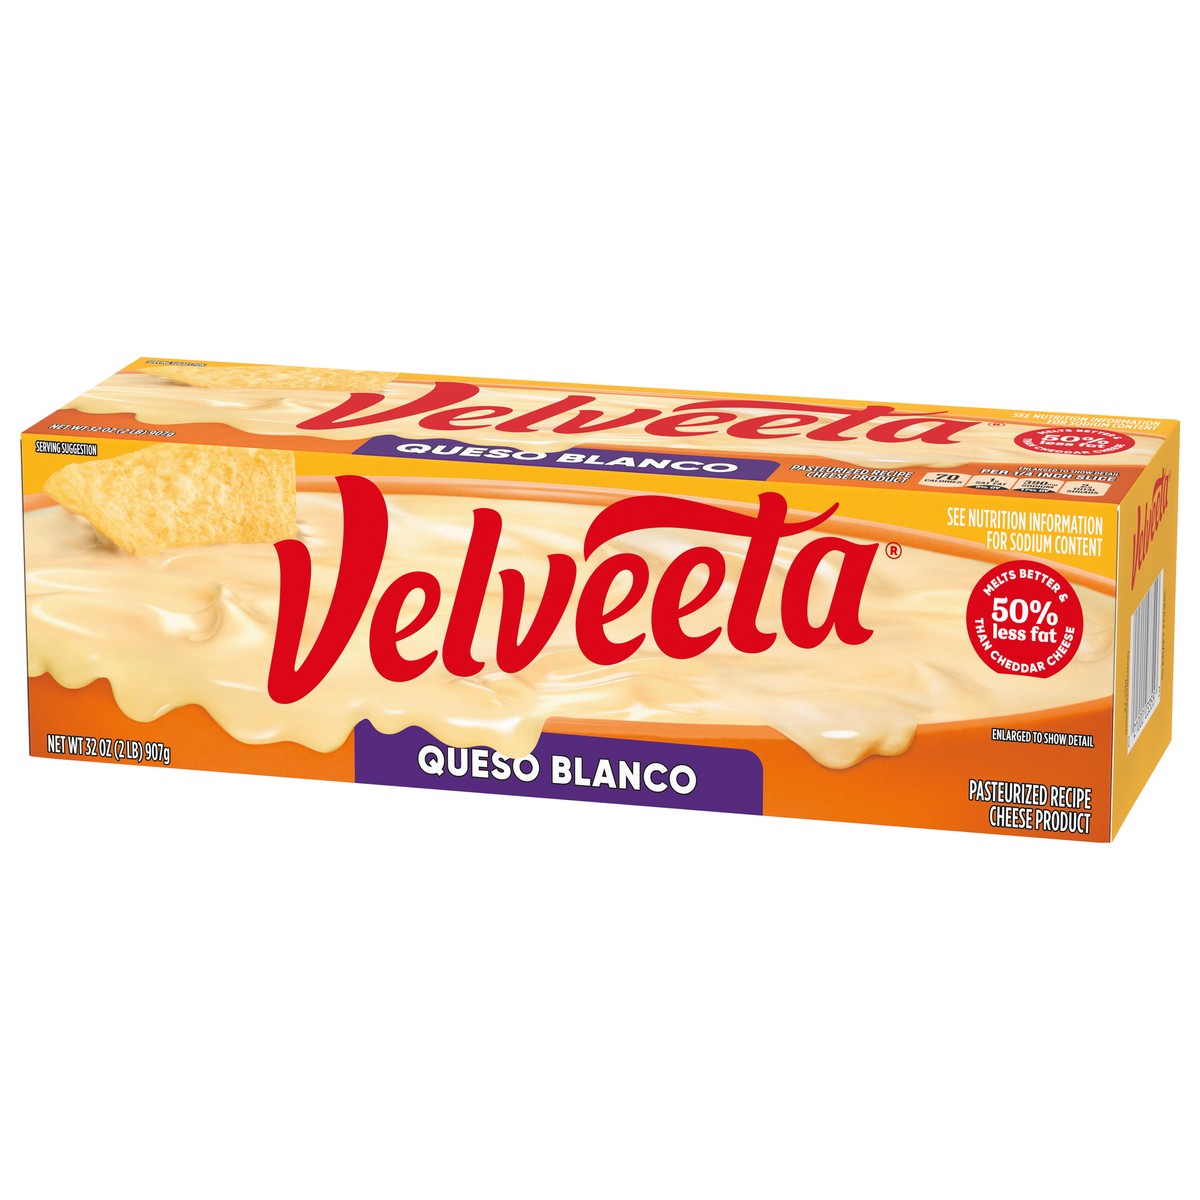 slide 5 of 9, Velveeta Queso Blanco Pasteurized Recipe Cheese Product, 32 oz Block, 32 oz